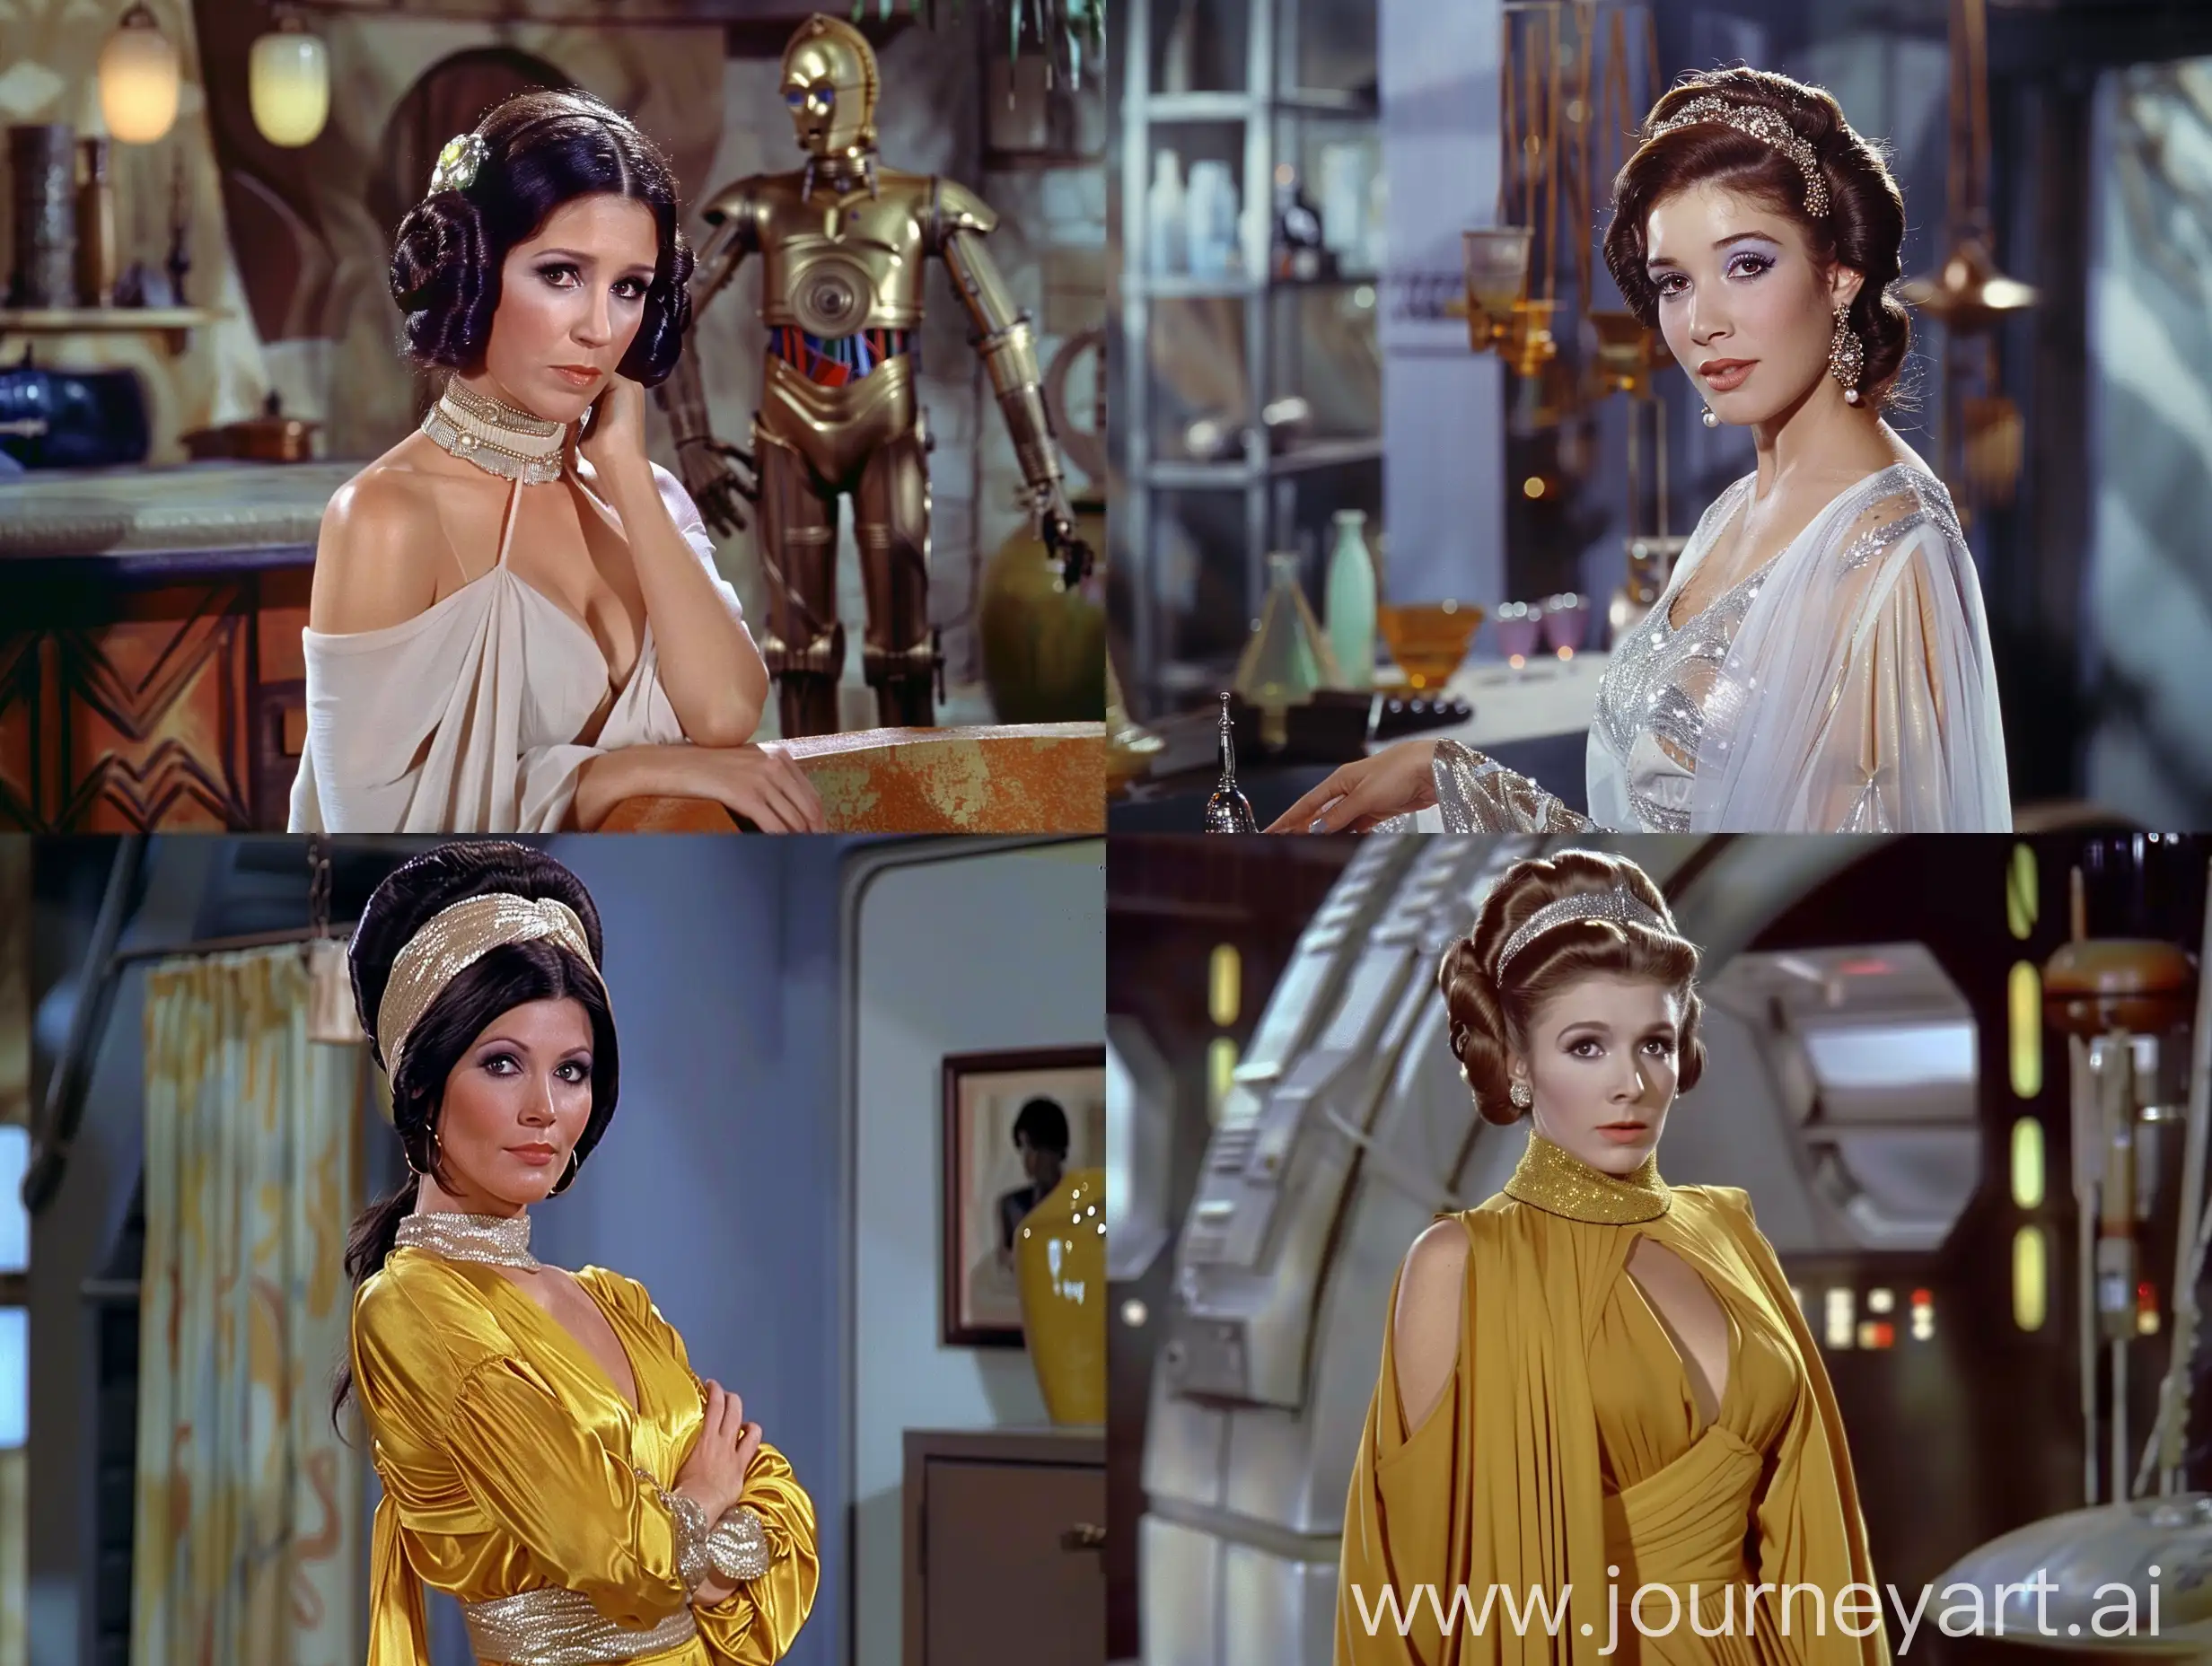 Monica-Geller-as-Princess-Leia-Friends-Tribute-in-Vintage-1950s-Panavision